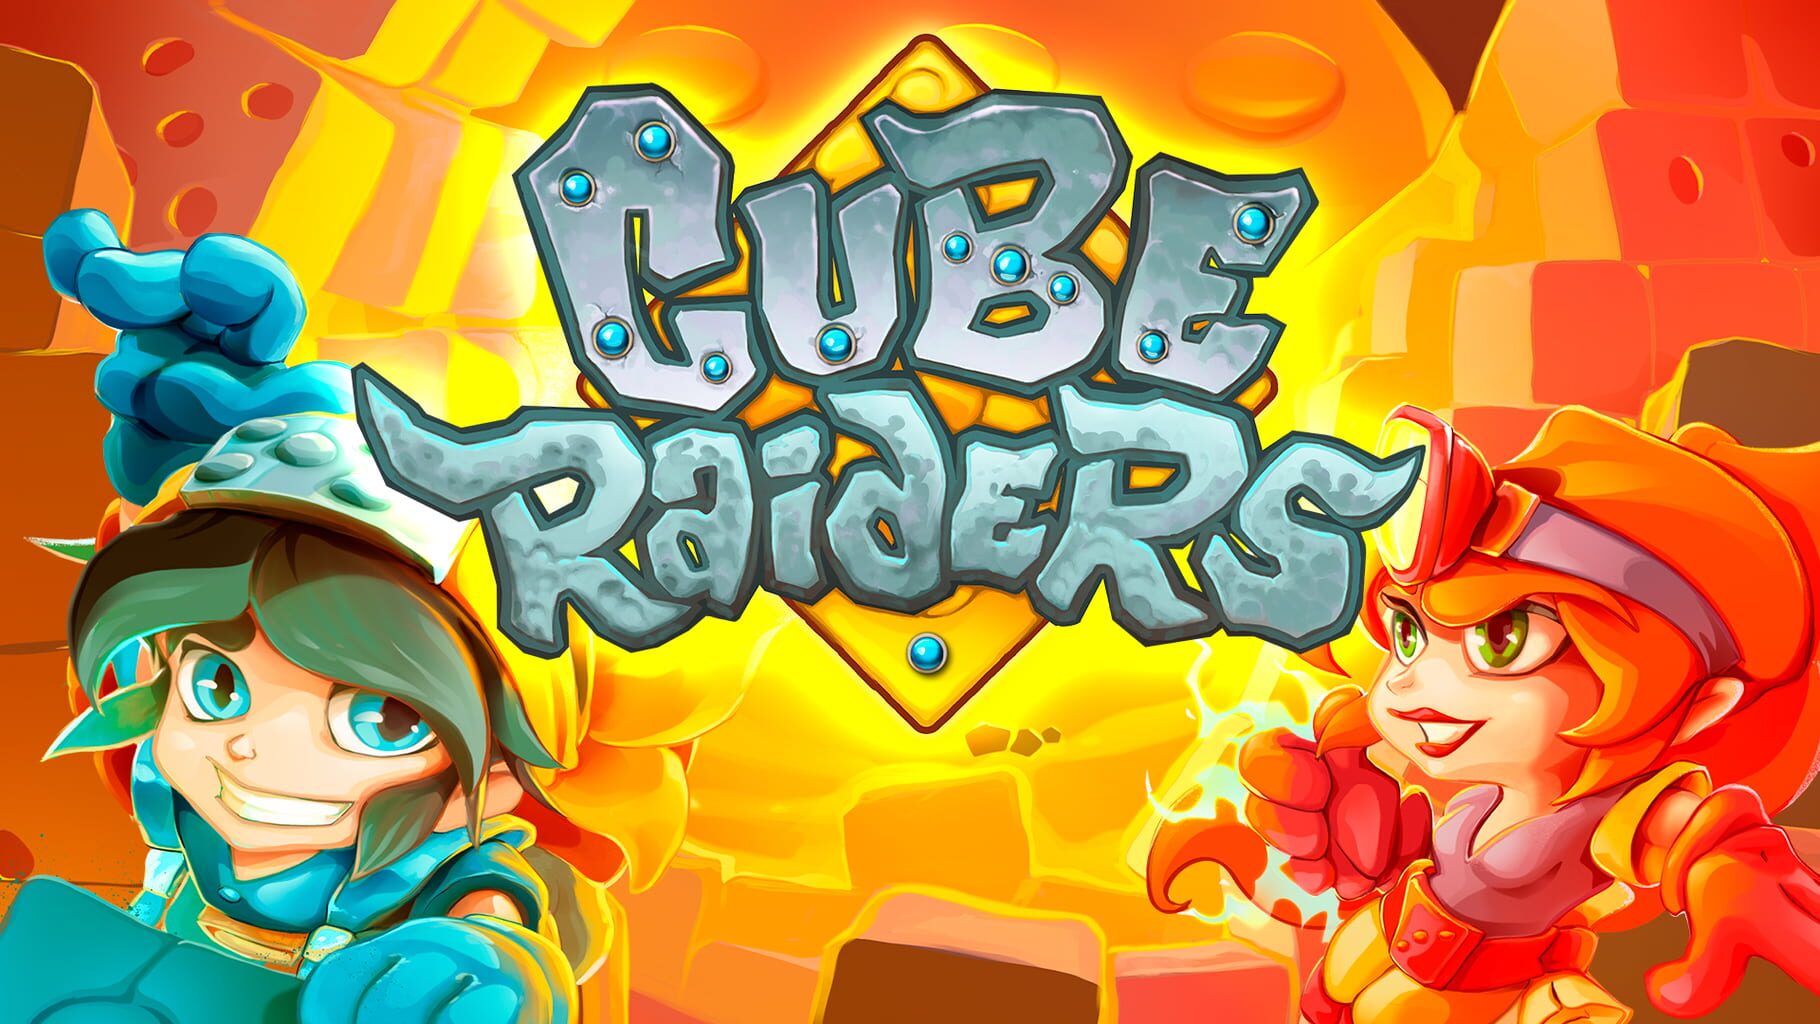 Cube Raiders artwork